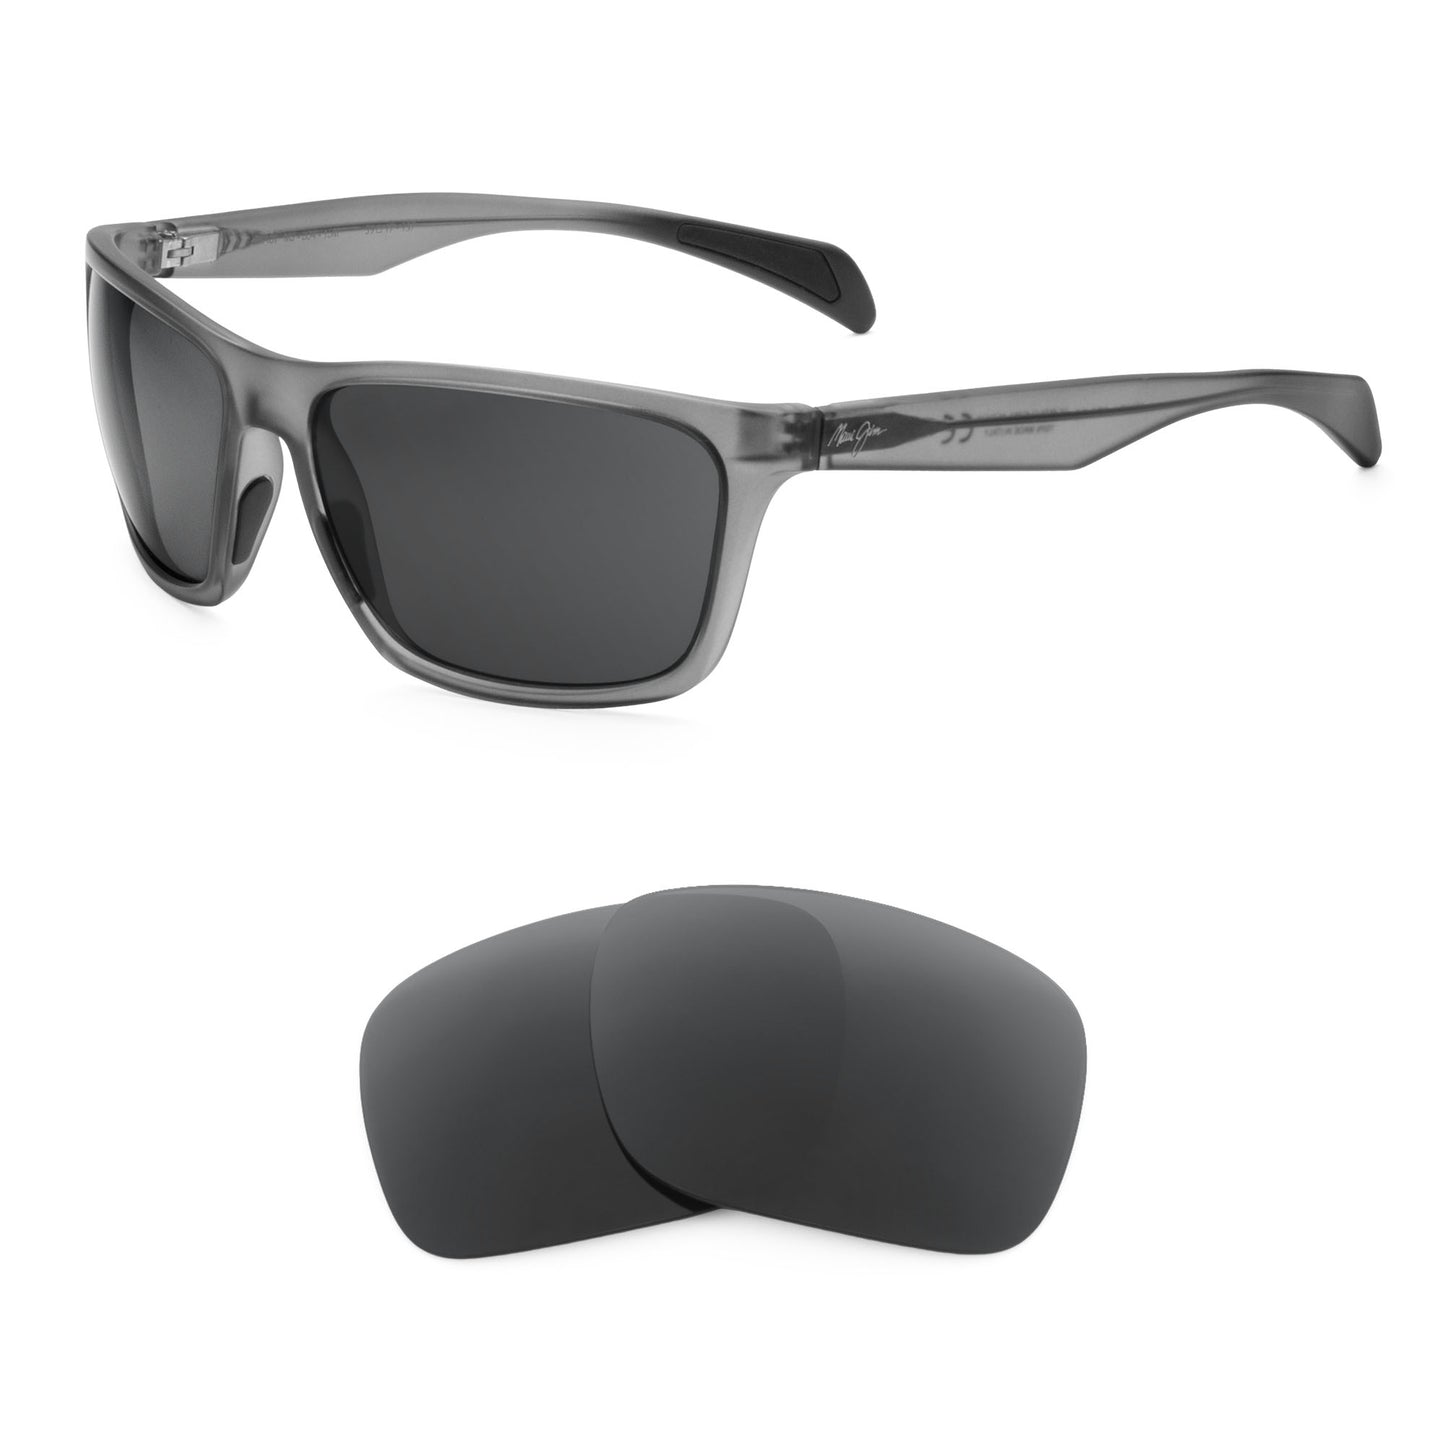 Maui Jim Makoa MJ804 sunglasses with replacement lenses